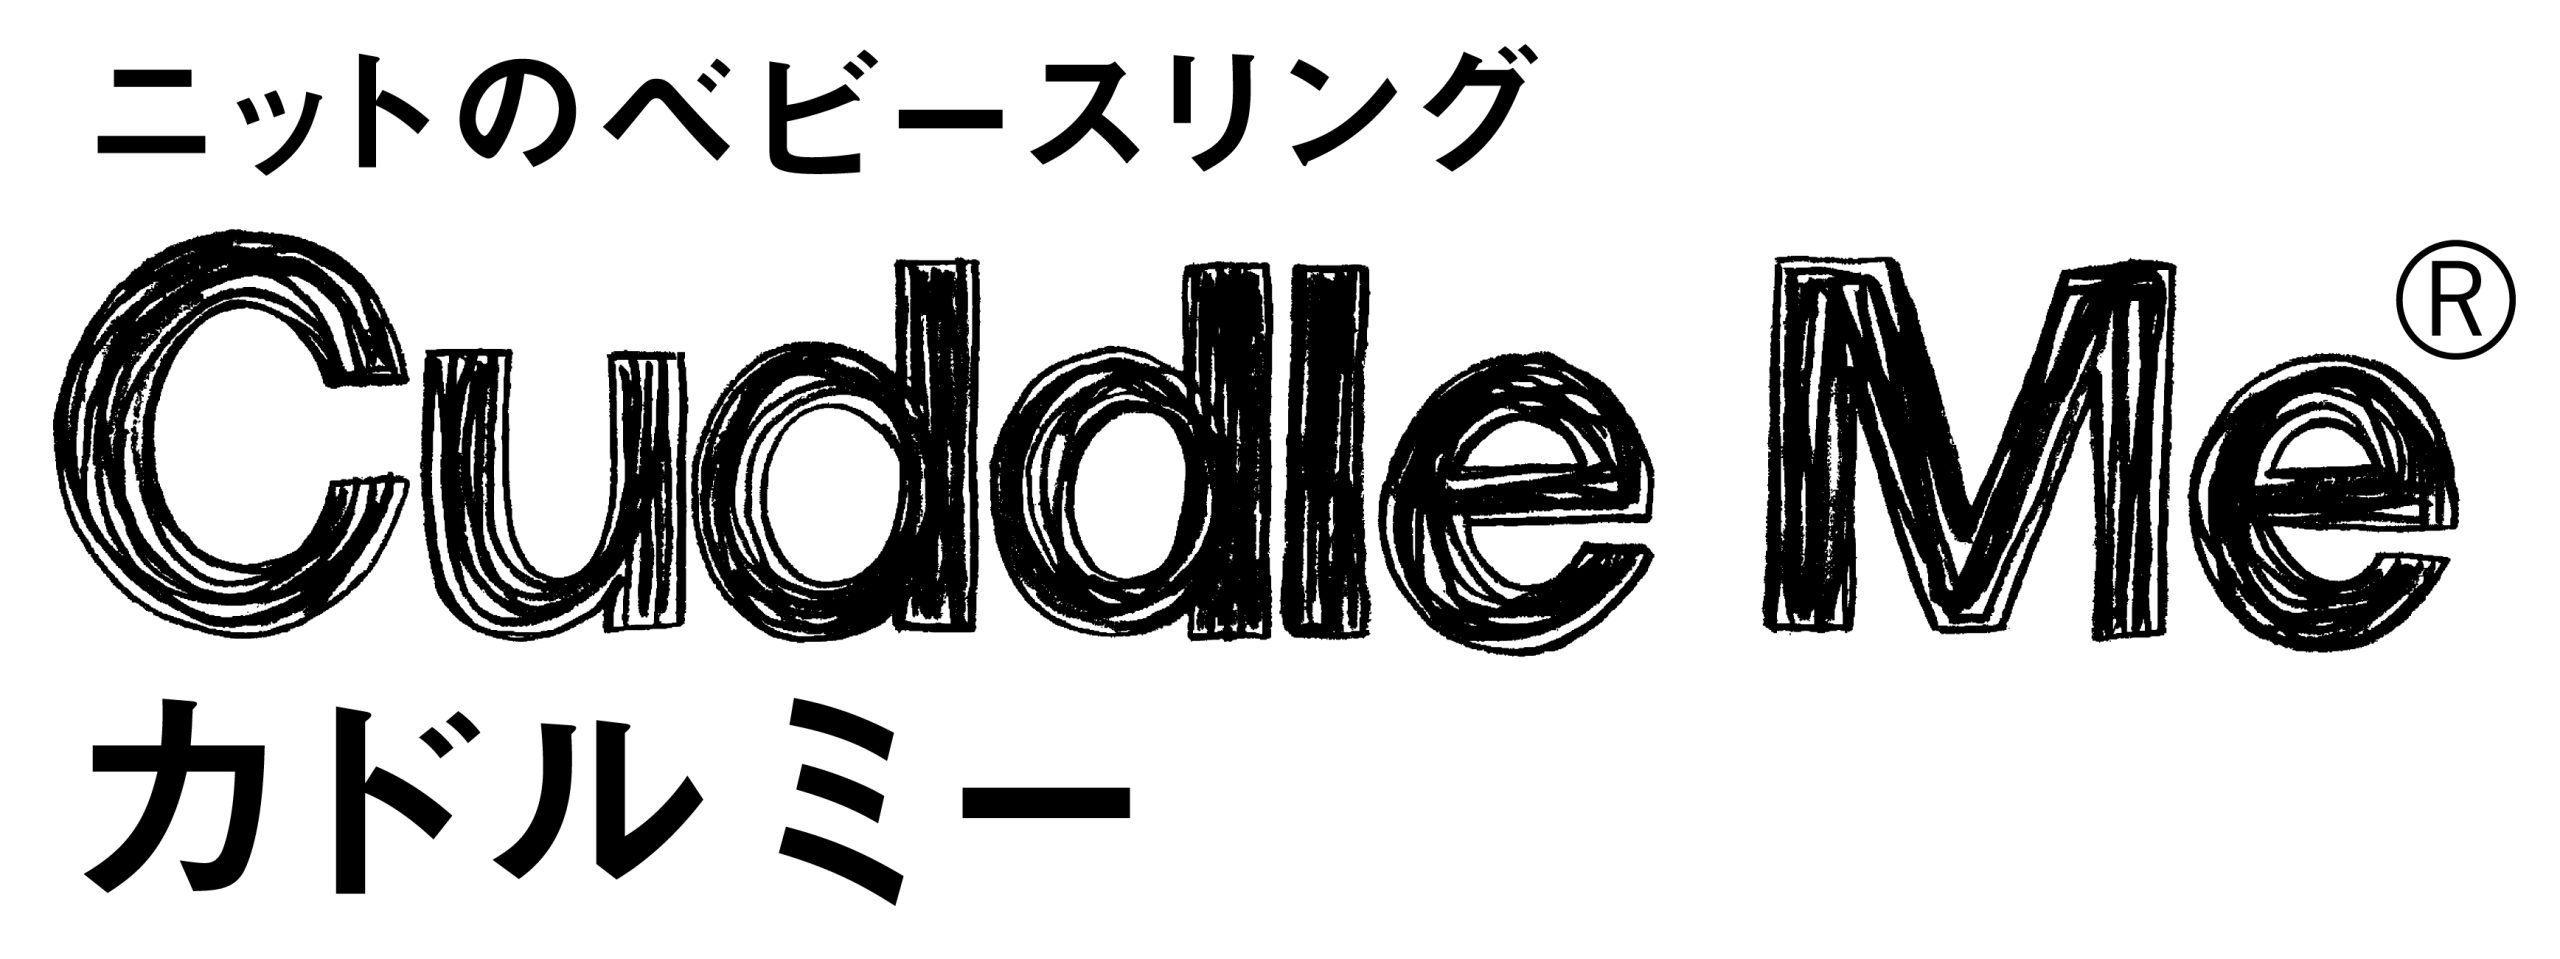 CuddleMe_Logo_20140318